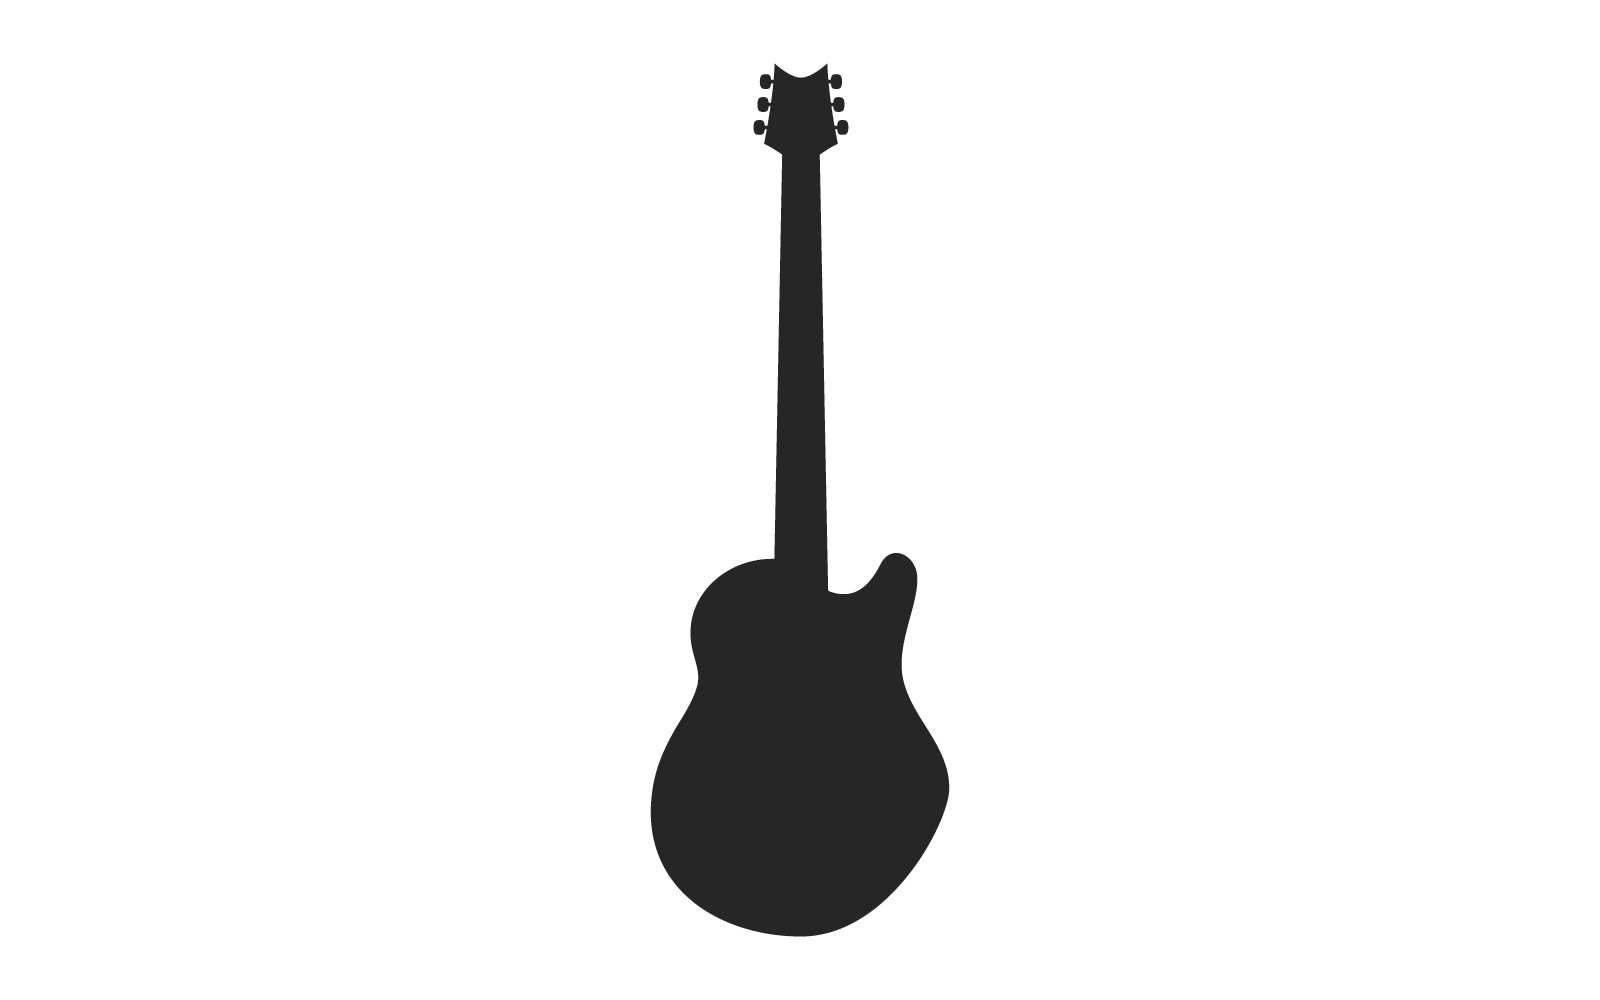 Guitar illustration logo flat design vector template